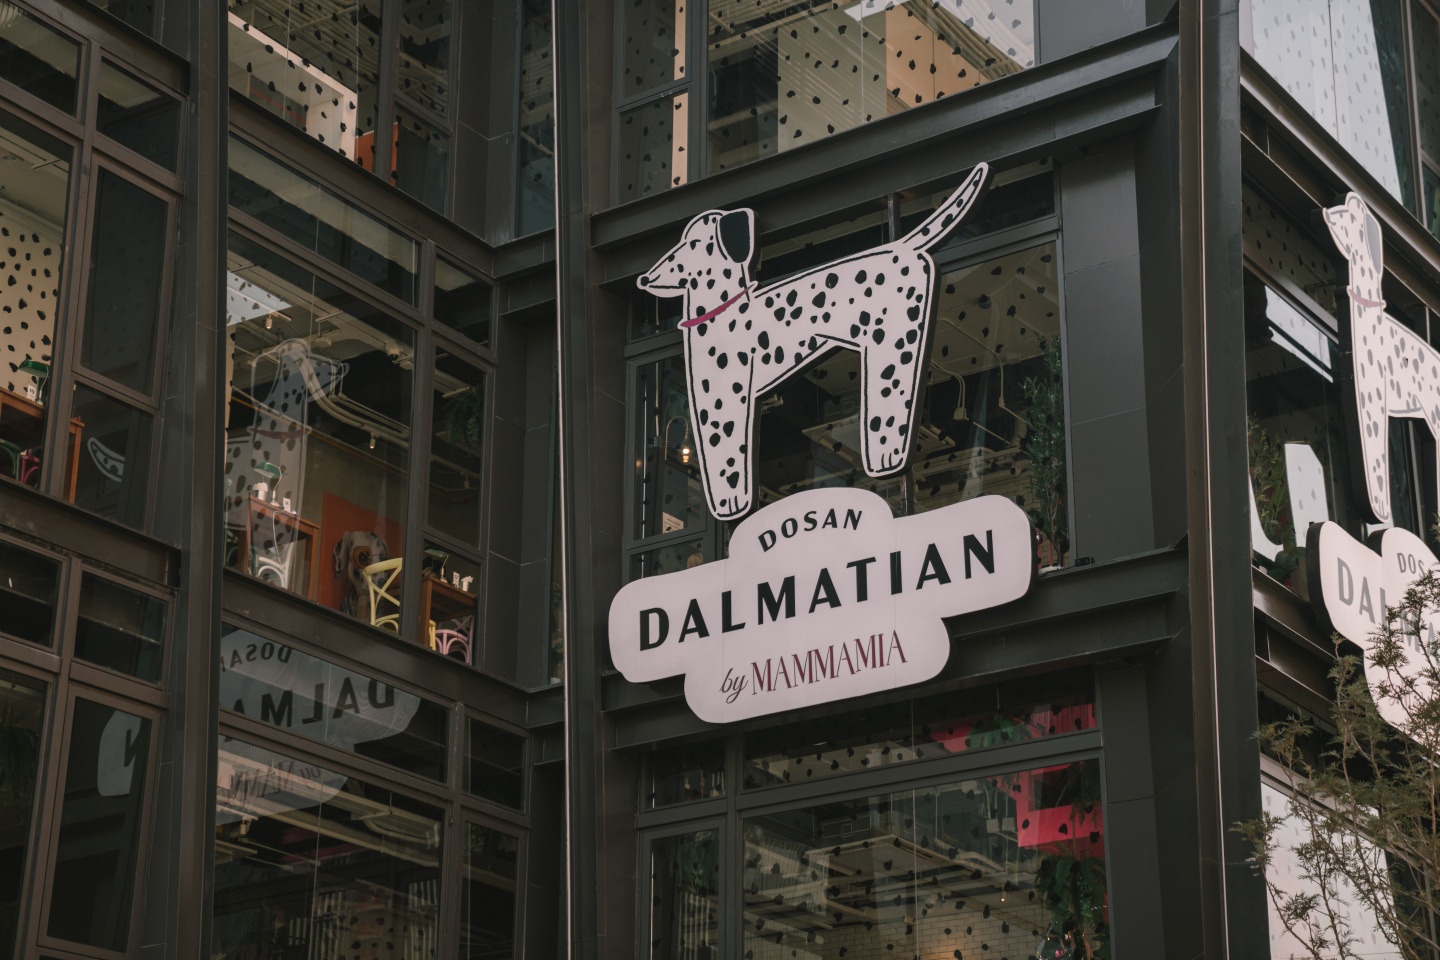 Dalmatian by Mammamia